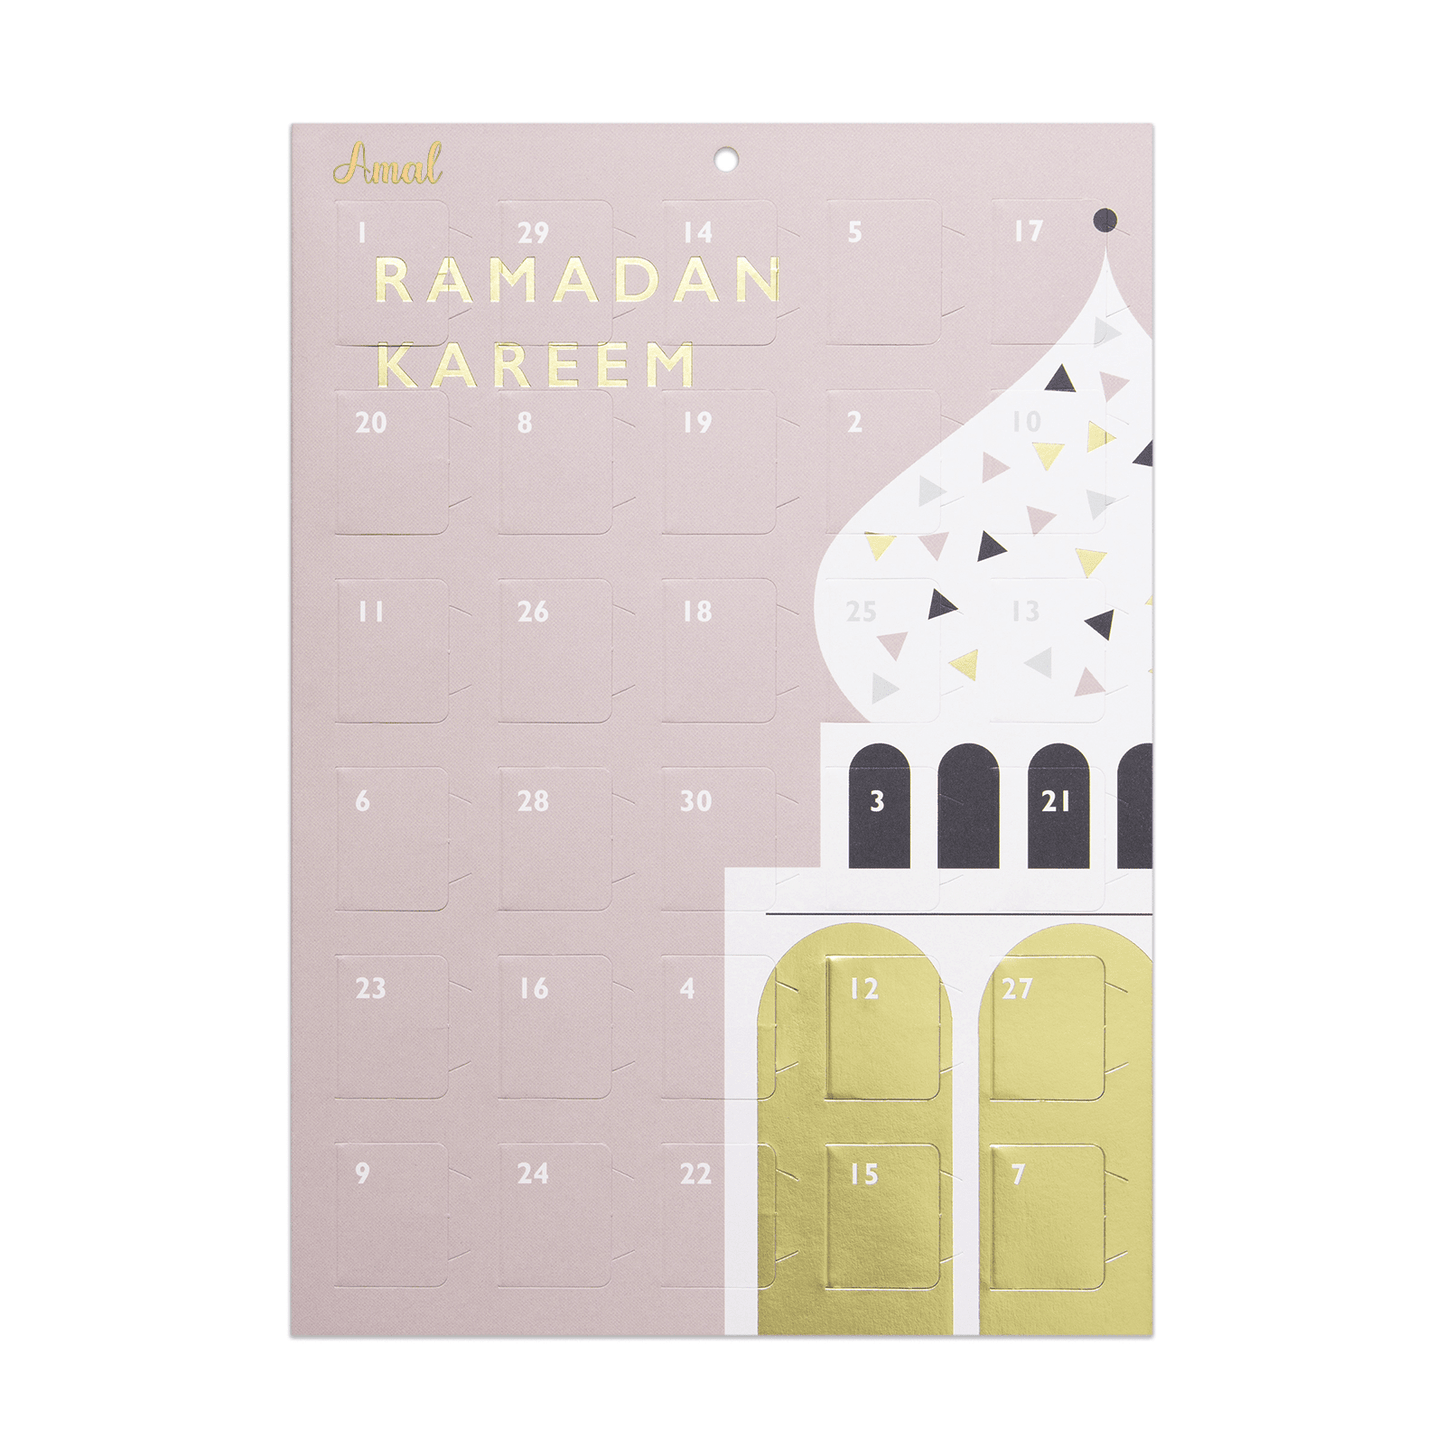 Ramadan Good Deeds Calendar